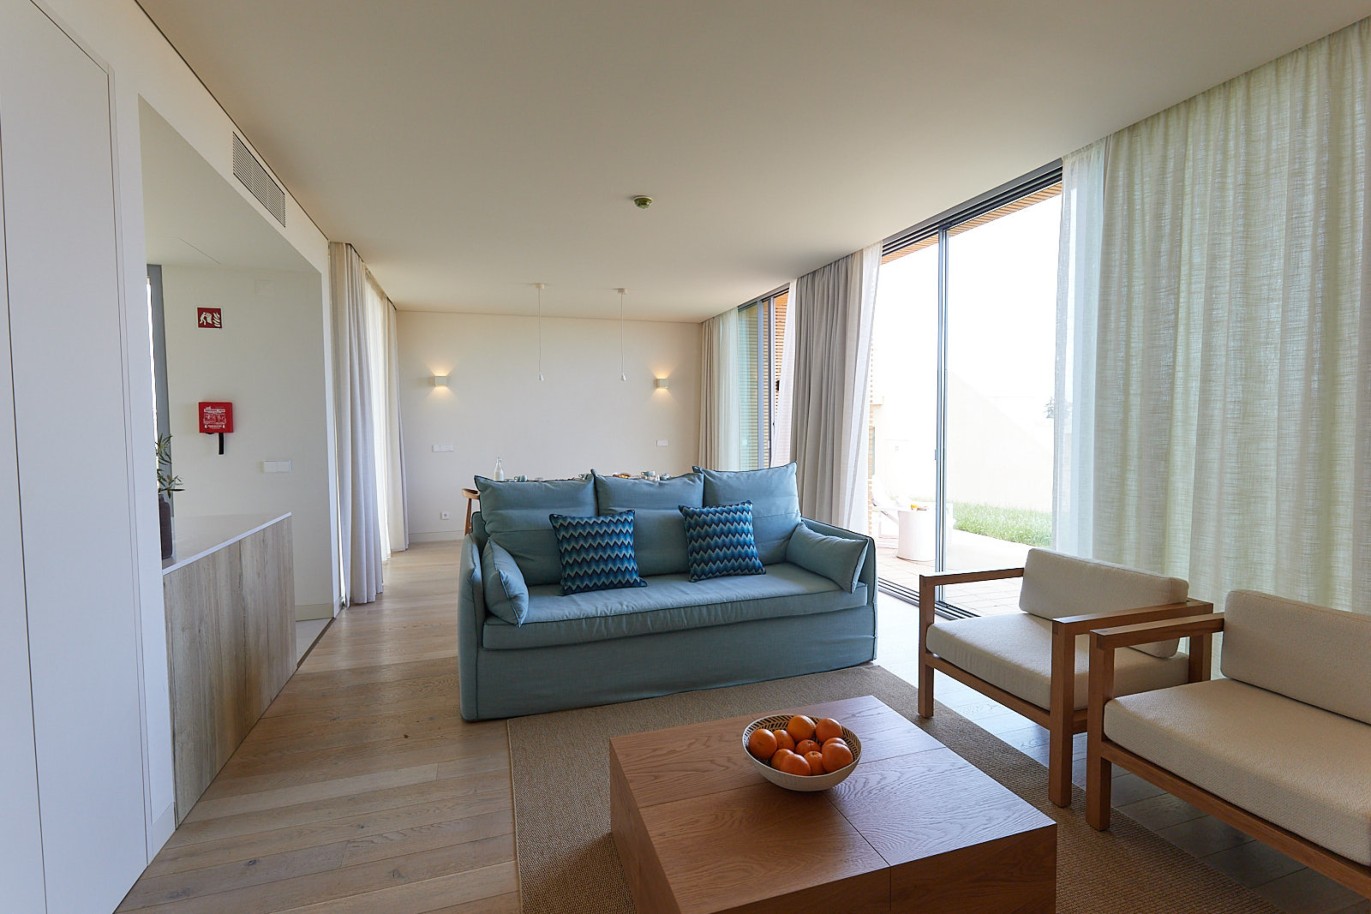 2 bedroom apartment in resort, for sale in Porches, Algarve_228953